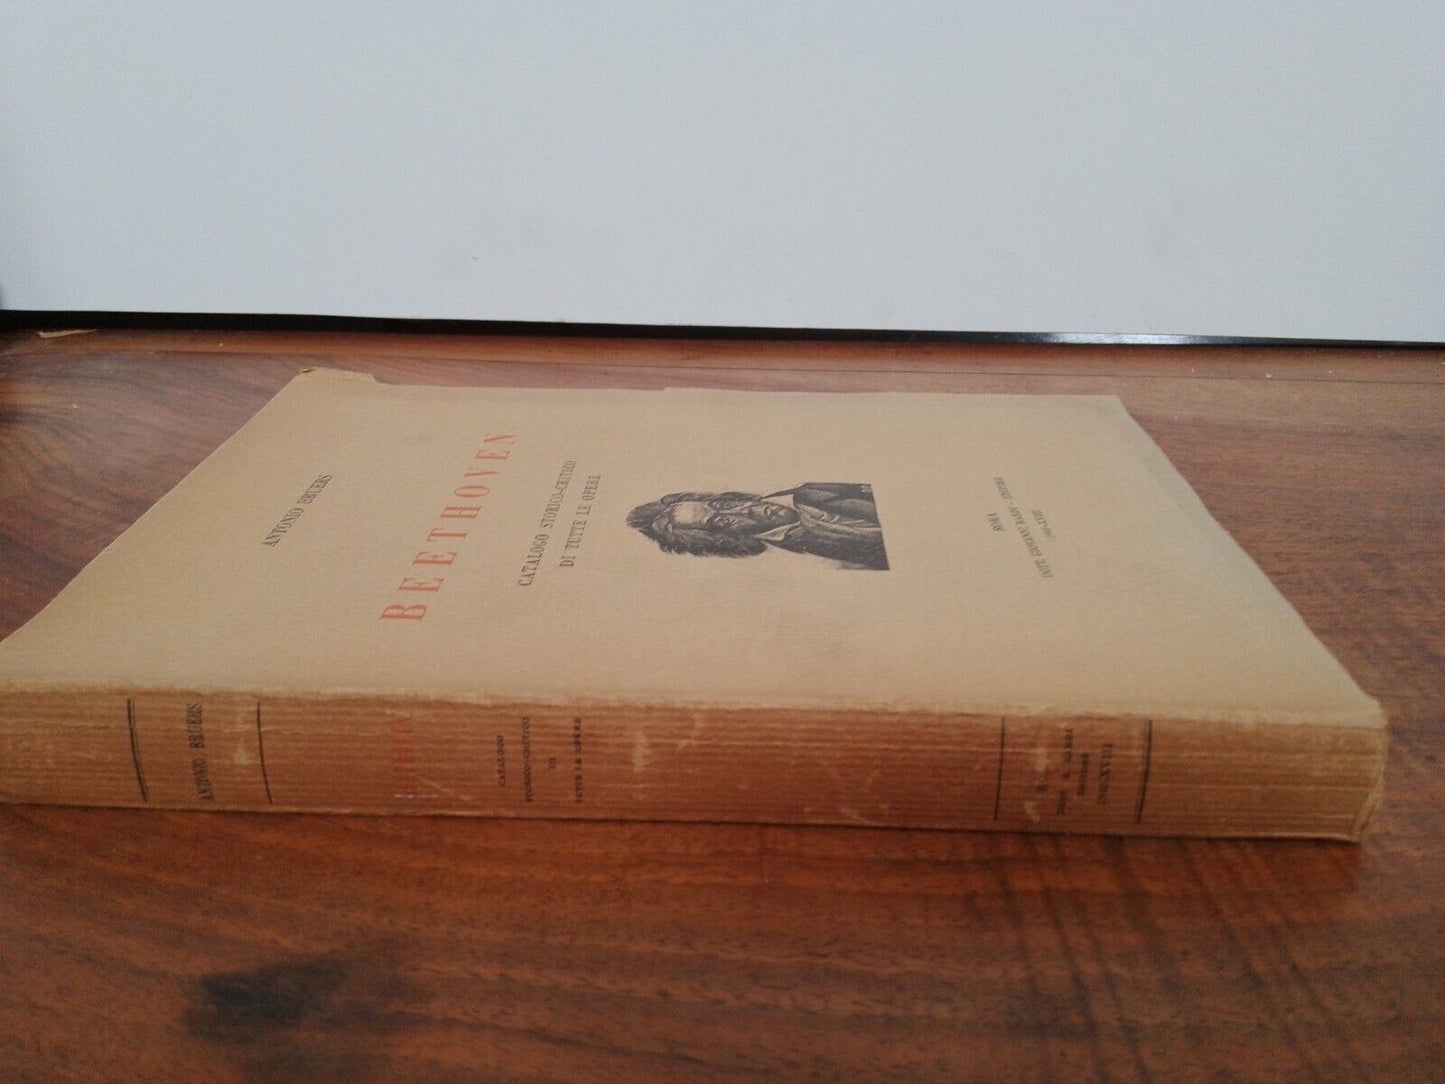 Beethoven, Antonio Bruers, Dott. Giovanni Bardi editore, 1940